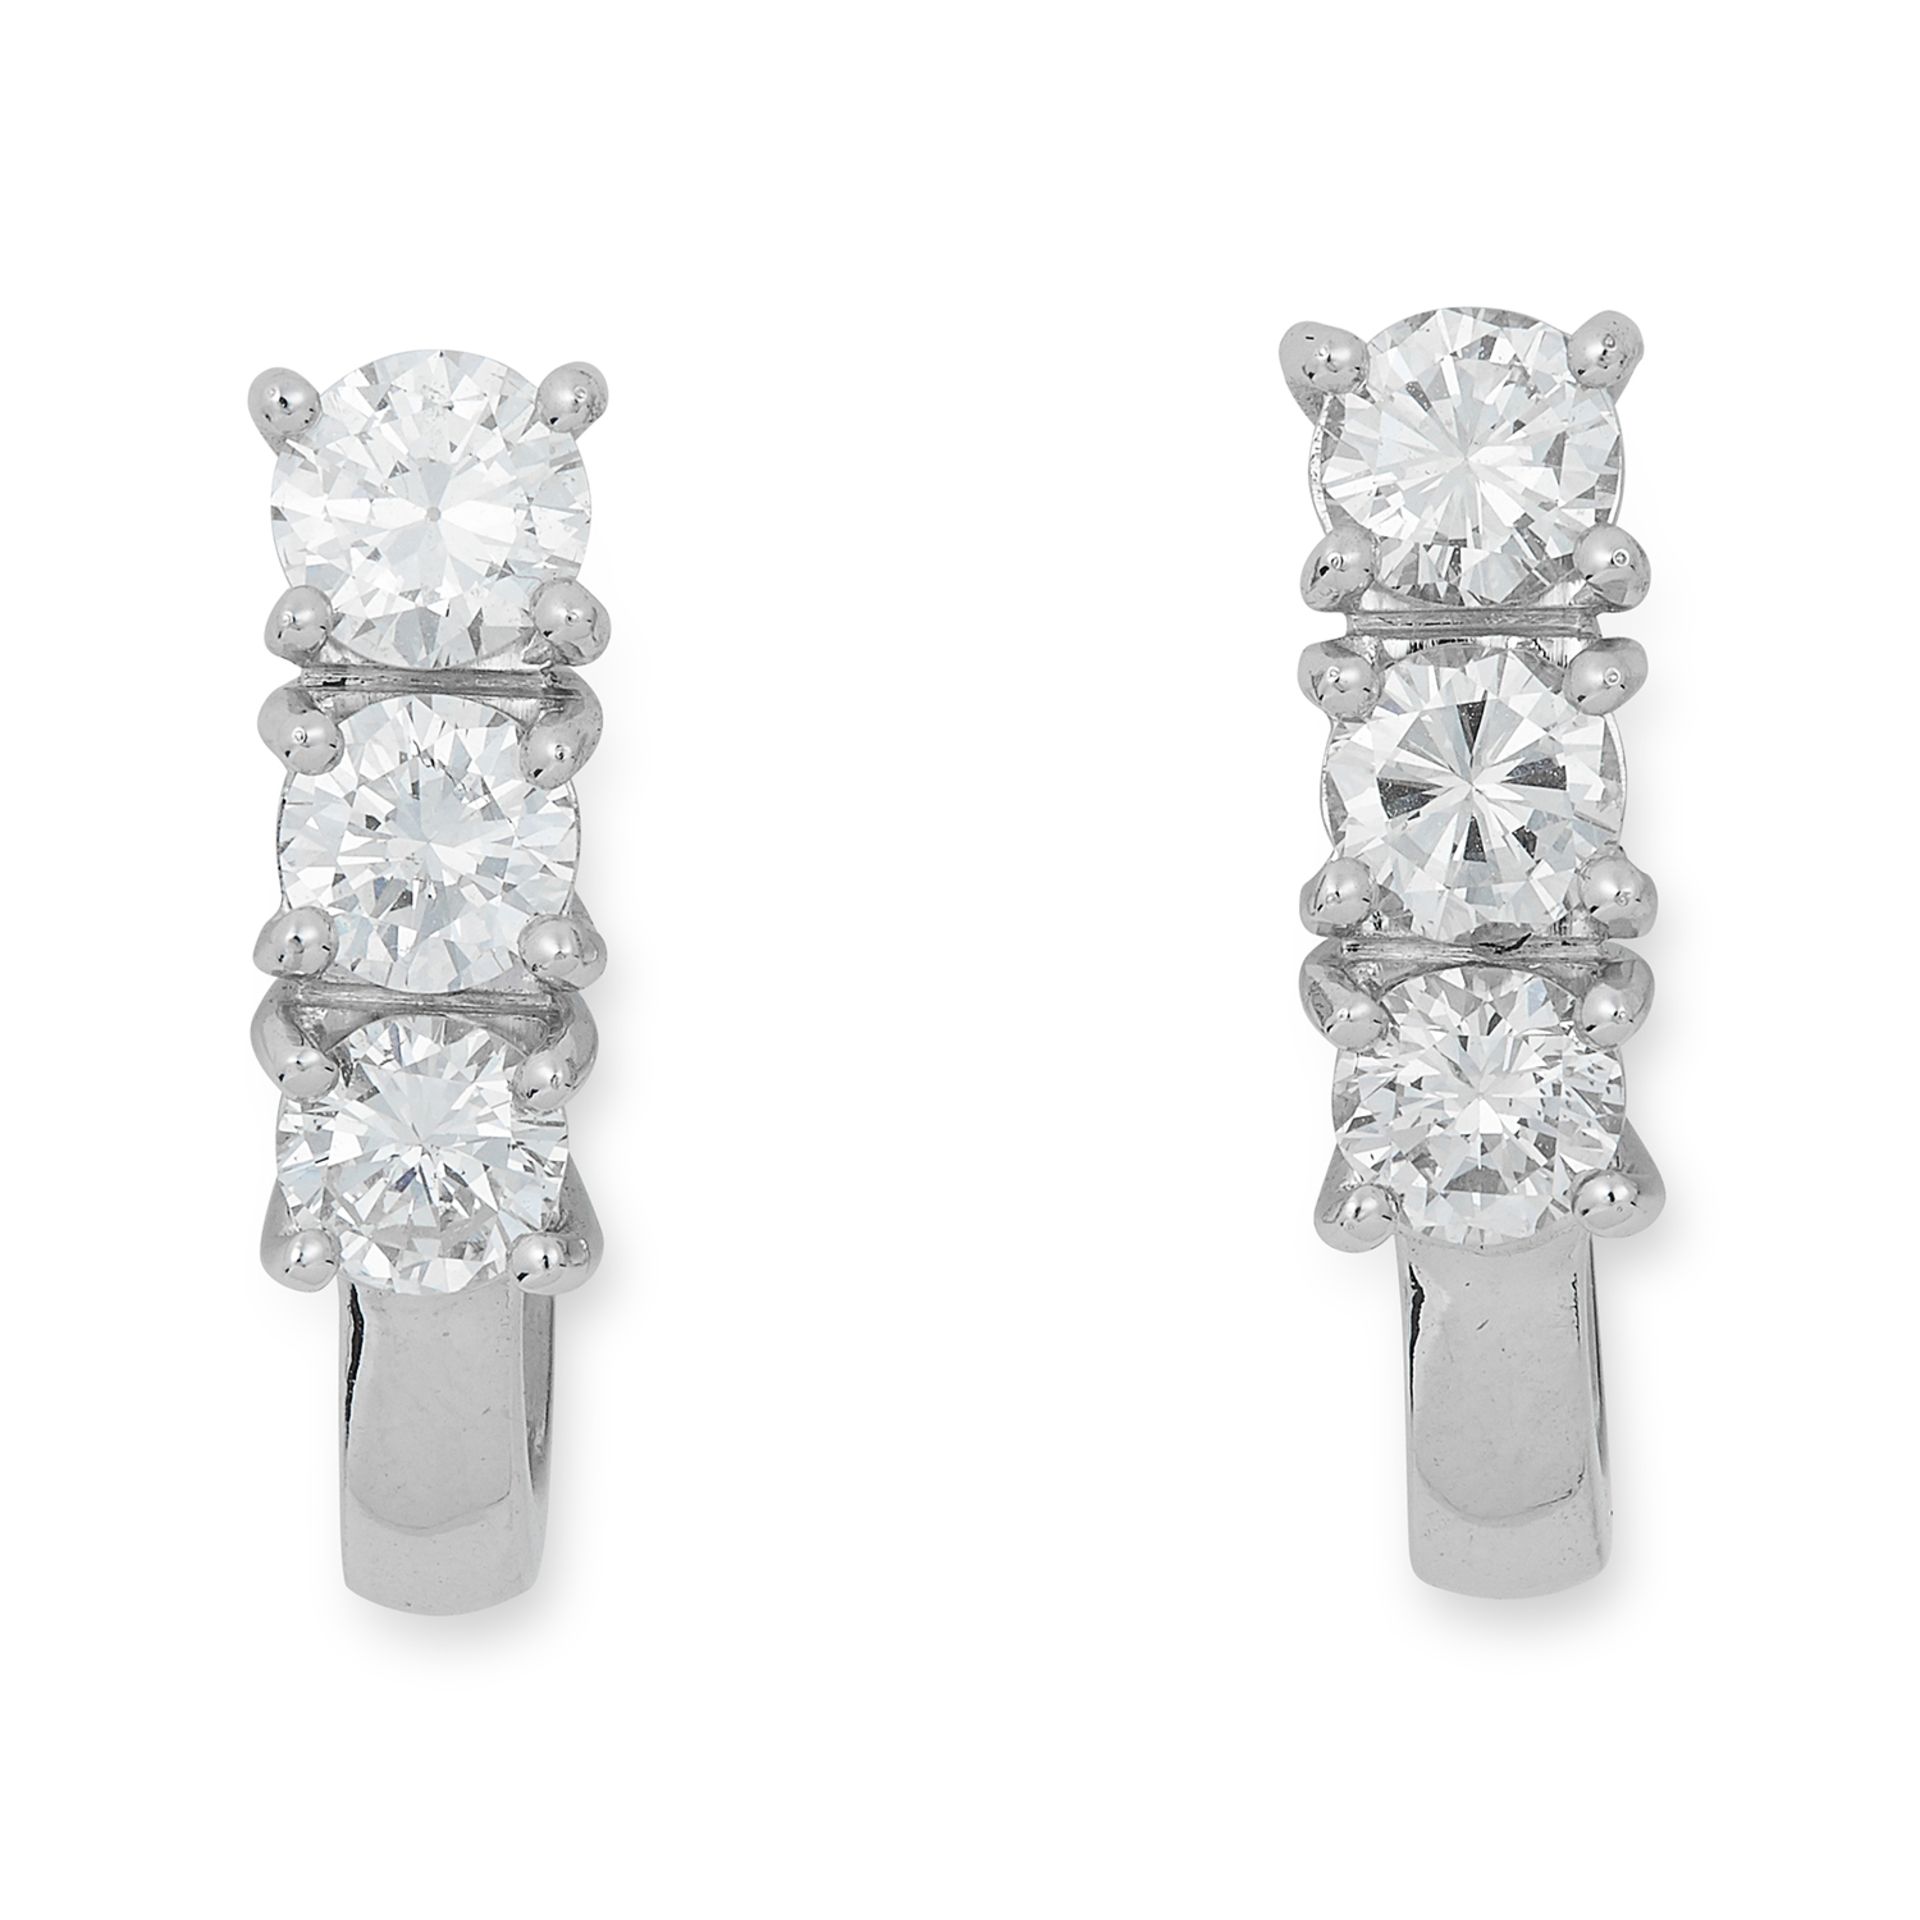 DIAMOND EARRINGS each set with three round cut diamonds, 5.7cm,